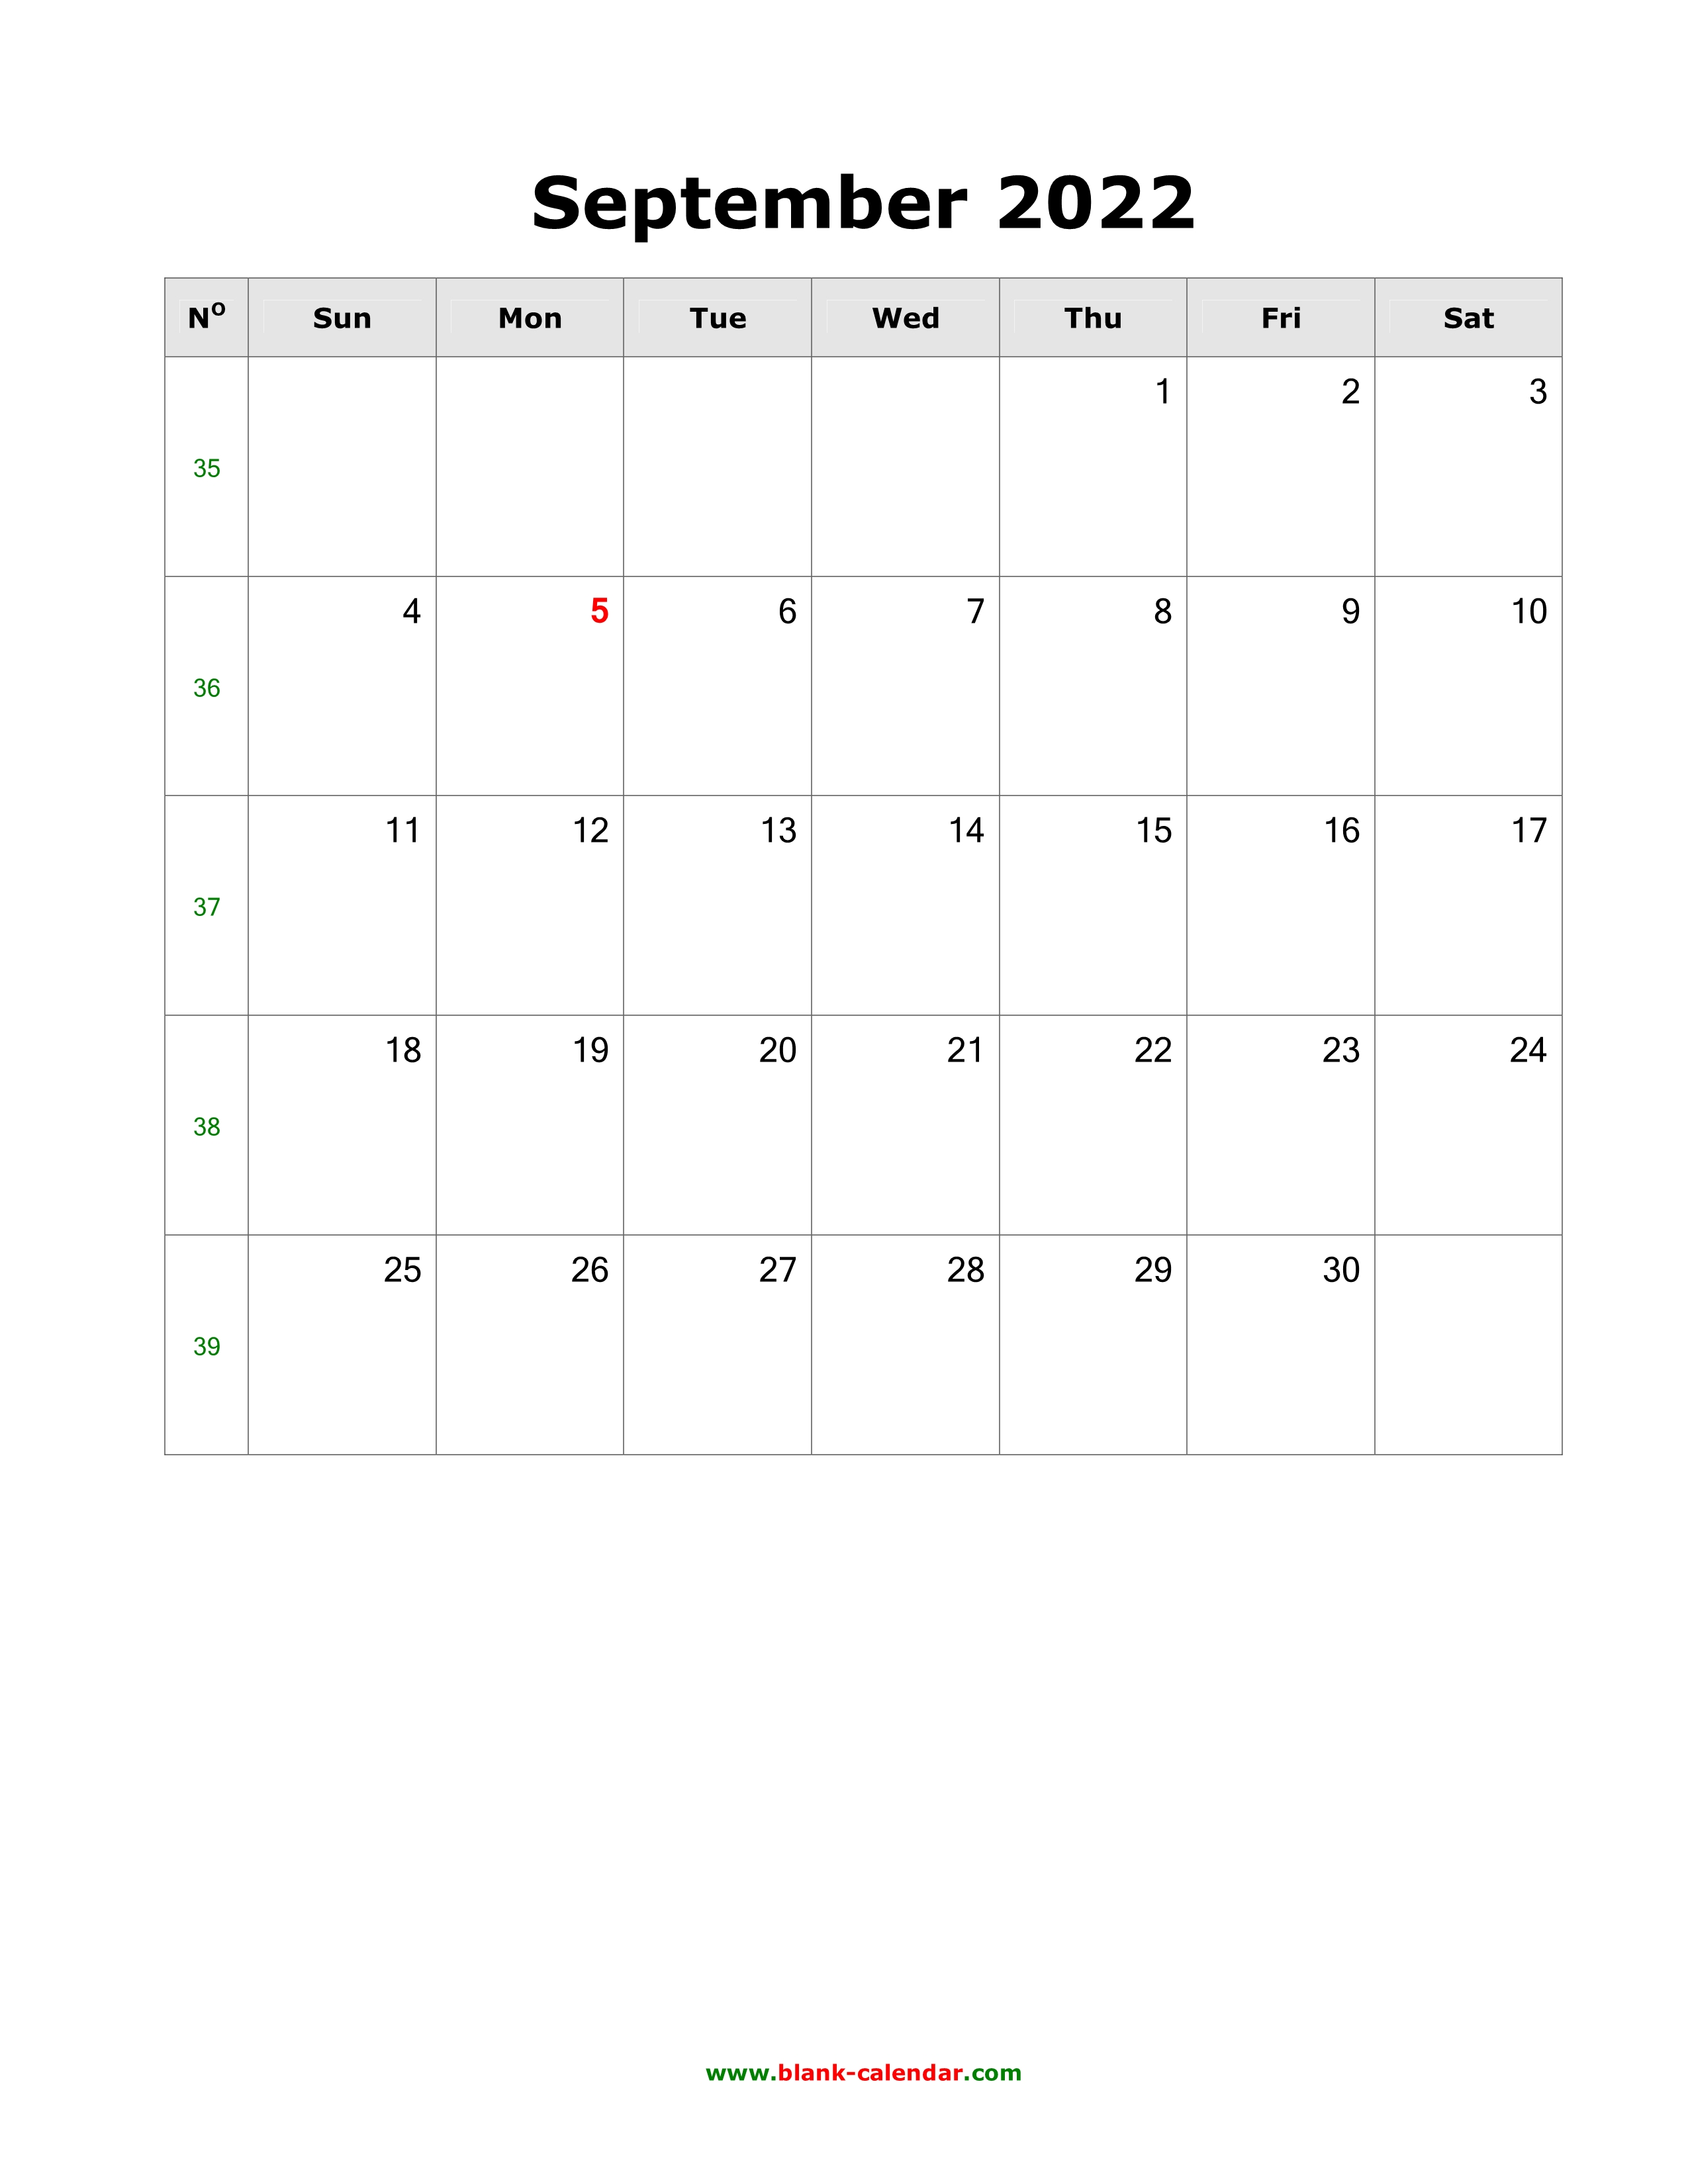 Download September 2022 Blank Calendar (Vertical)